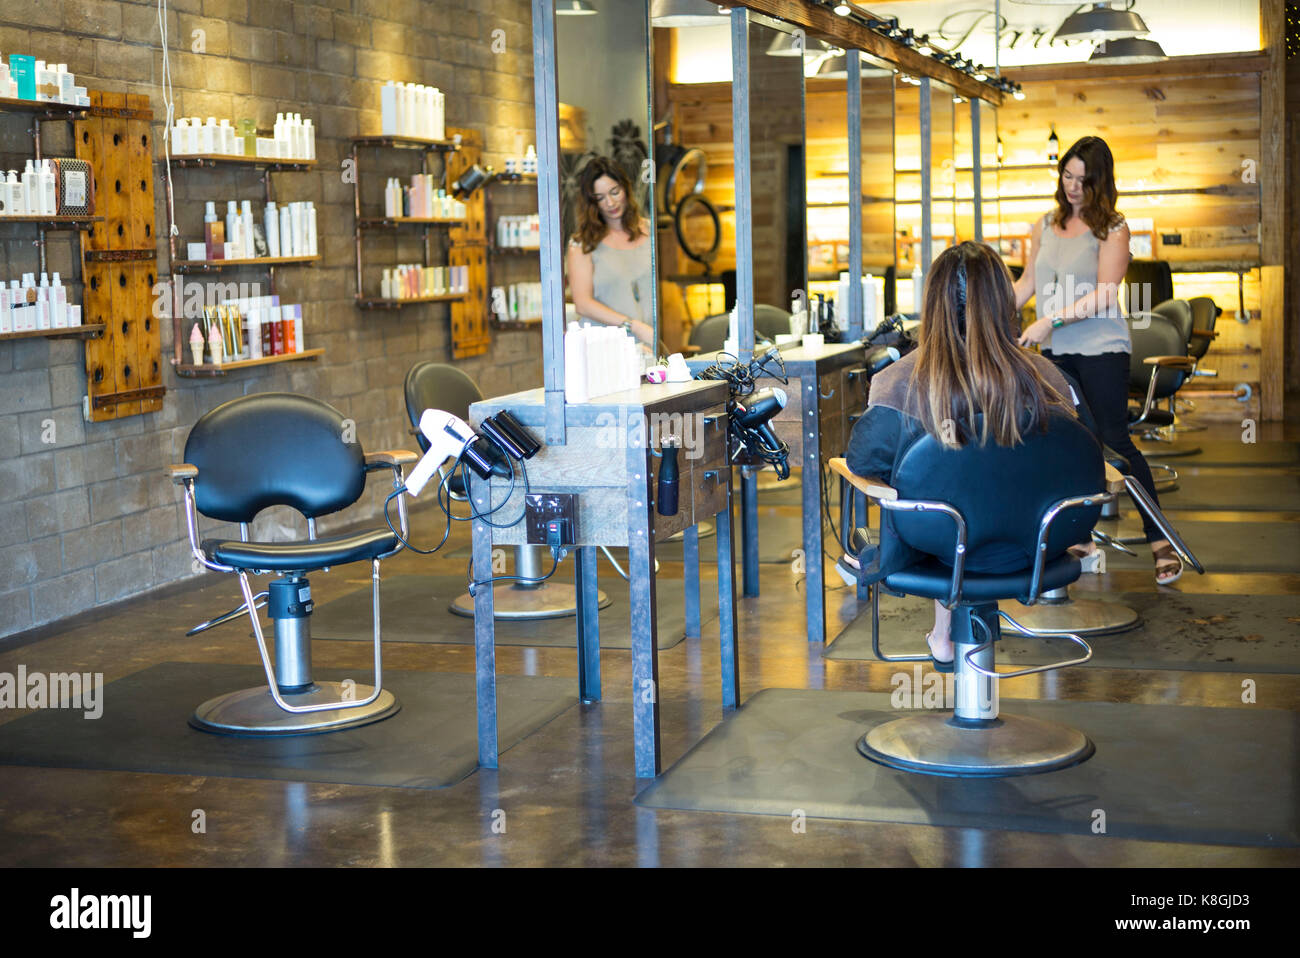 Hairstylist working in salon Stock Photo